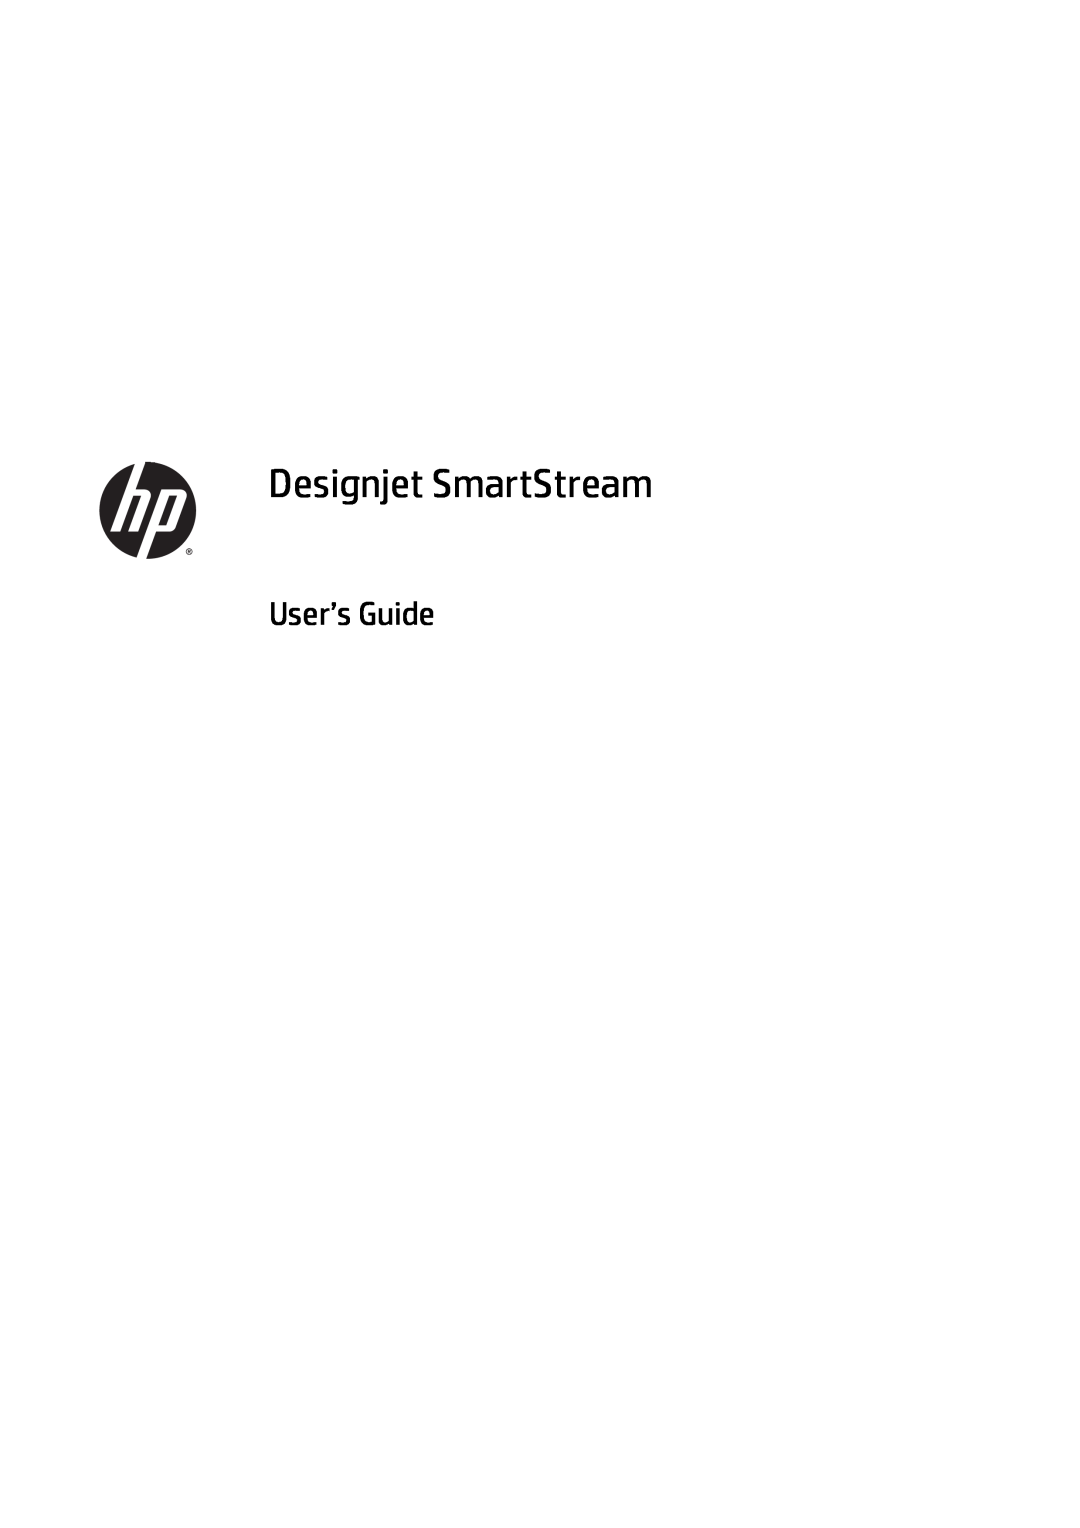 HP SmartStream Software for s manual Designjet SmartStream, User’s Guide 